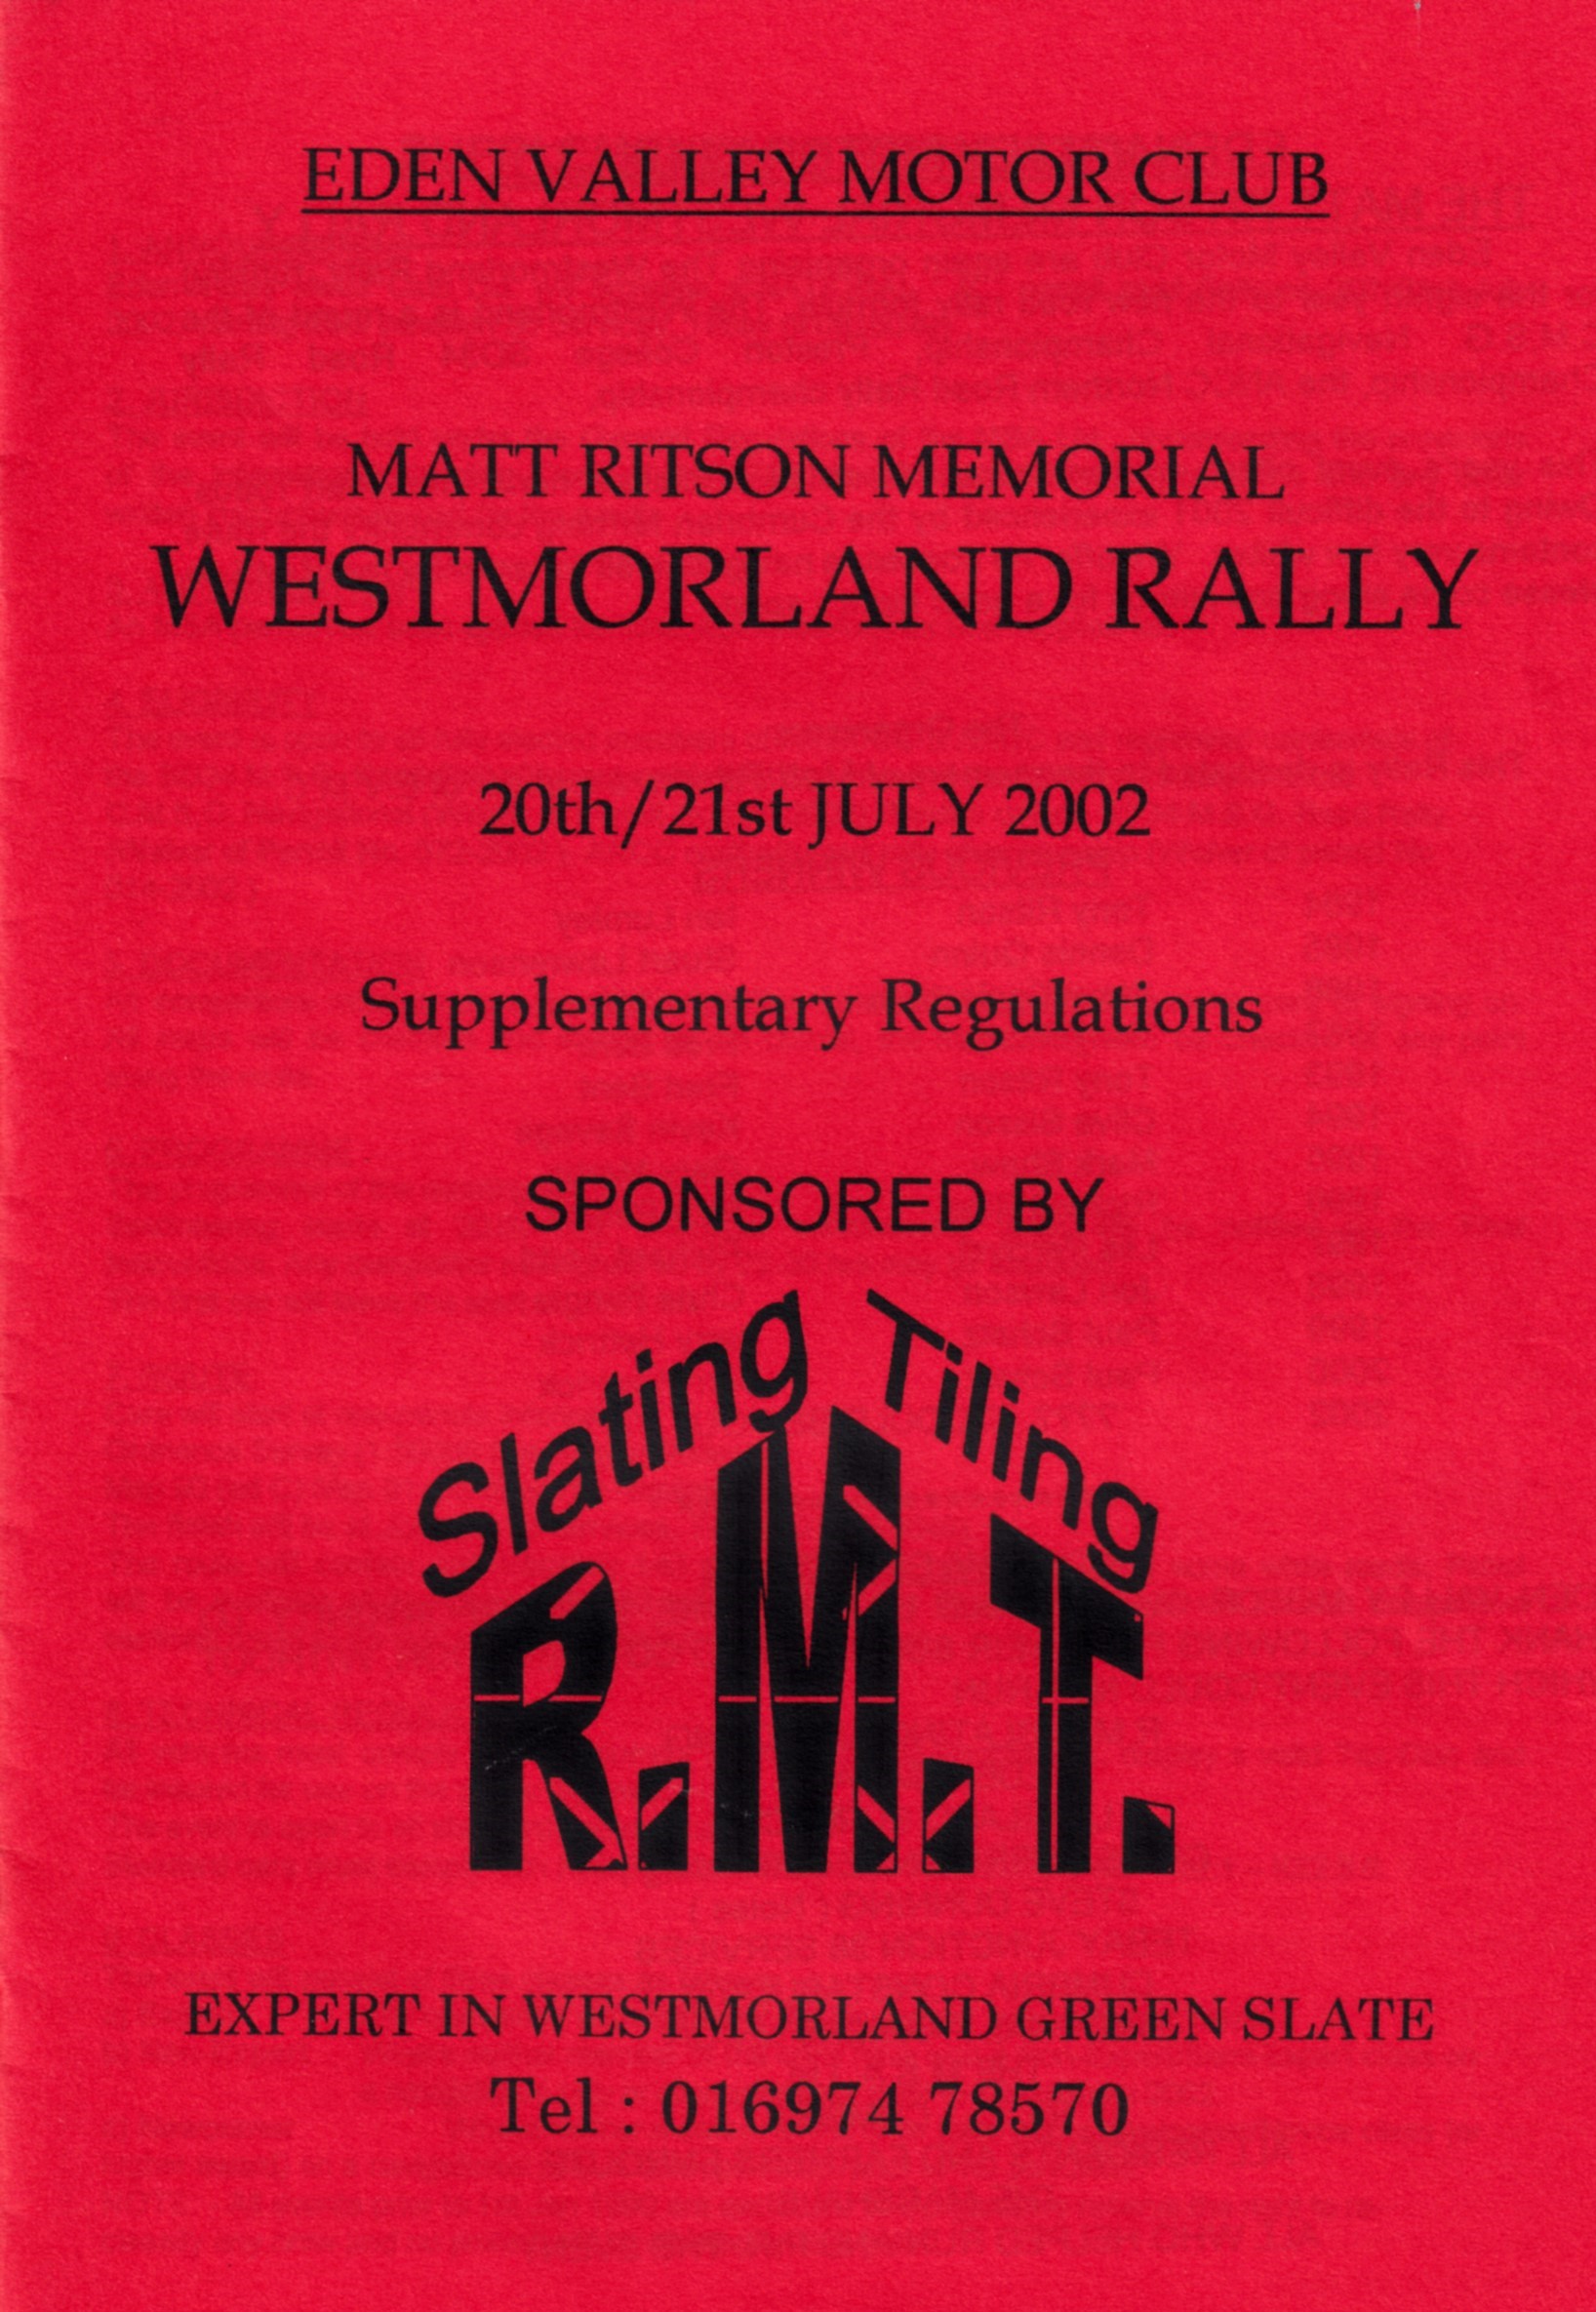 Matt Ritson Memorial Westmorland Rally 2002